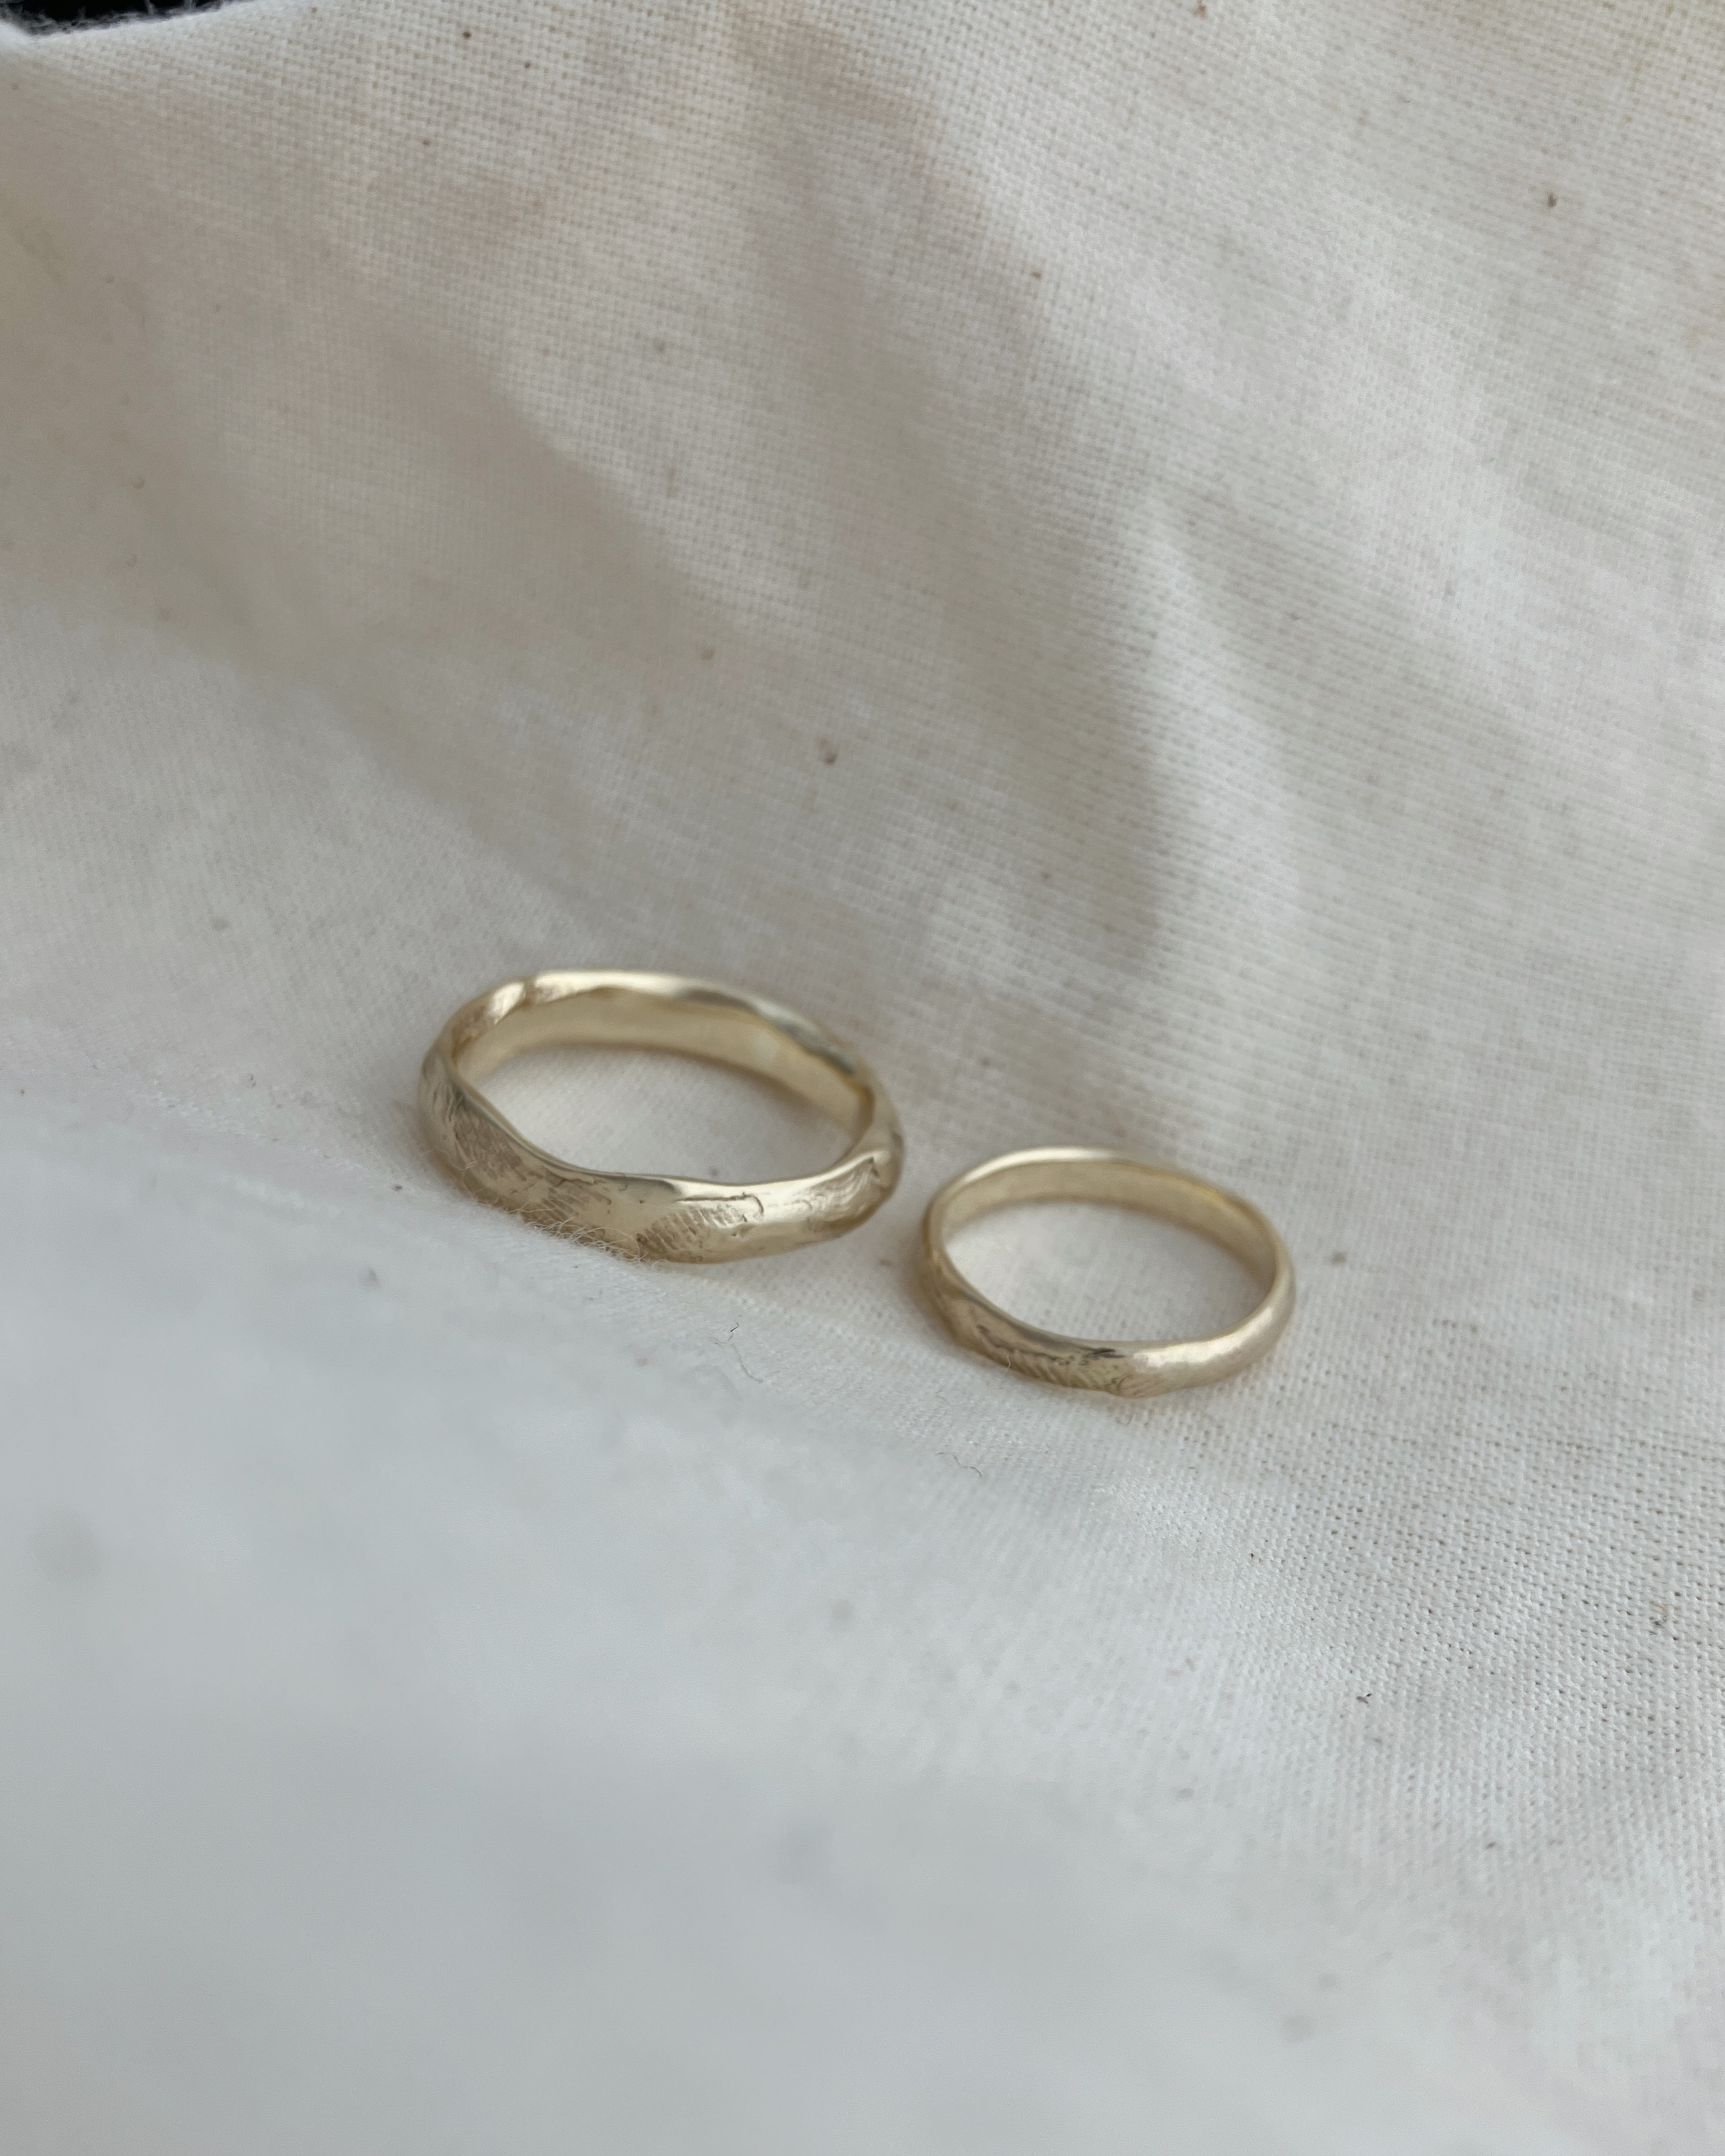 fingerprint wedding band recycled 9, 14, 18 carat gold handmade in bristol